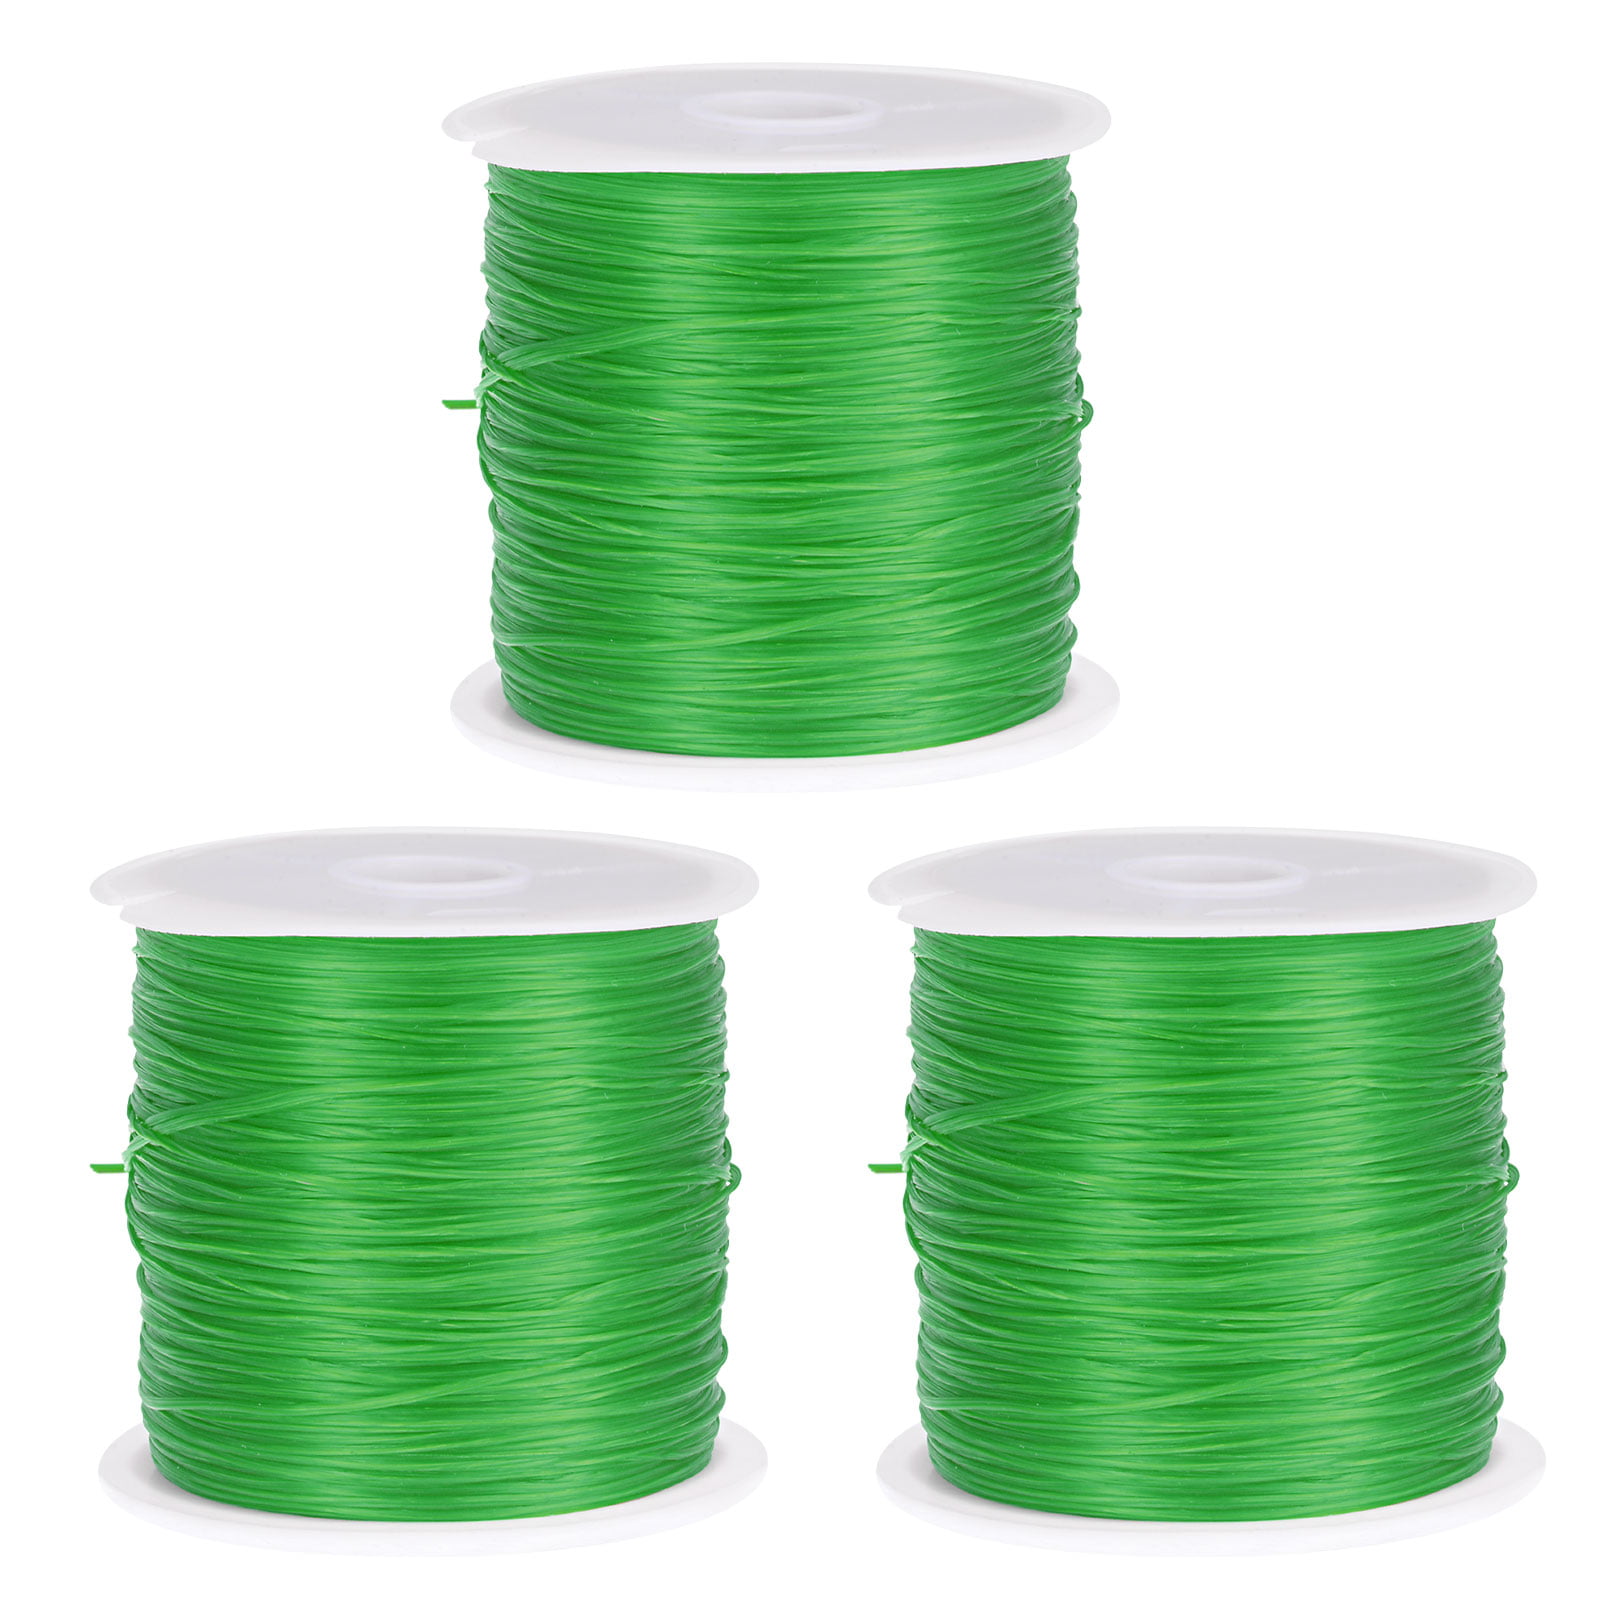 Uxcell Elastic Cord DIY Making Stretchy String Craft Wire, Medium Green, 3  Rolls 